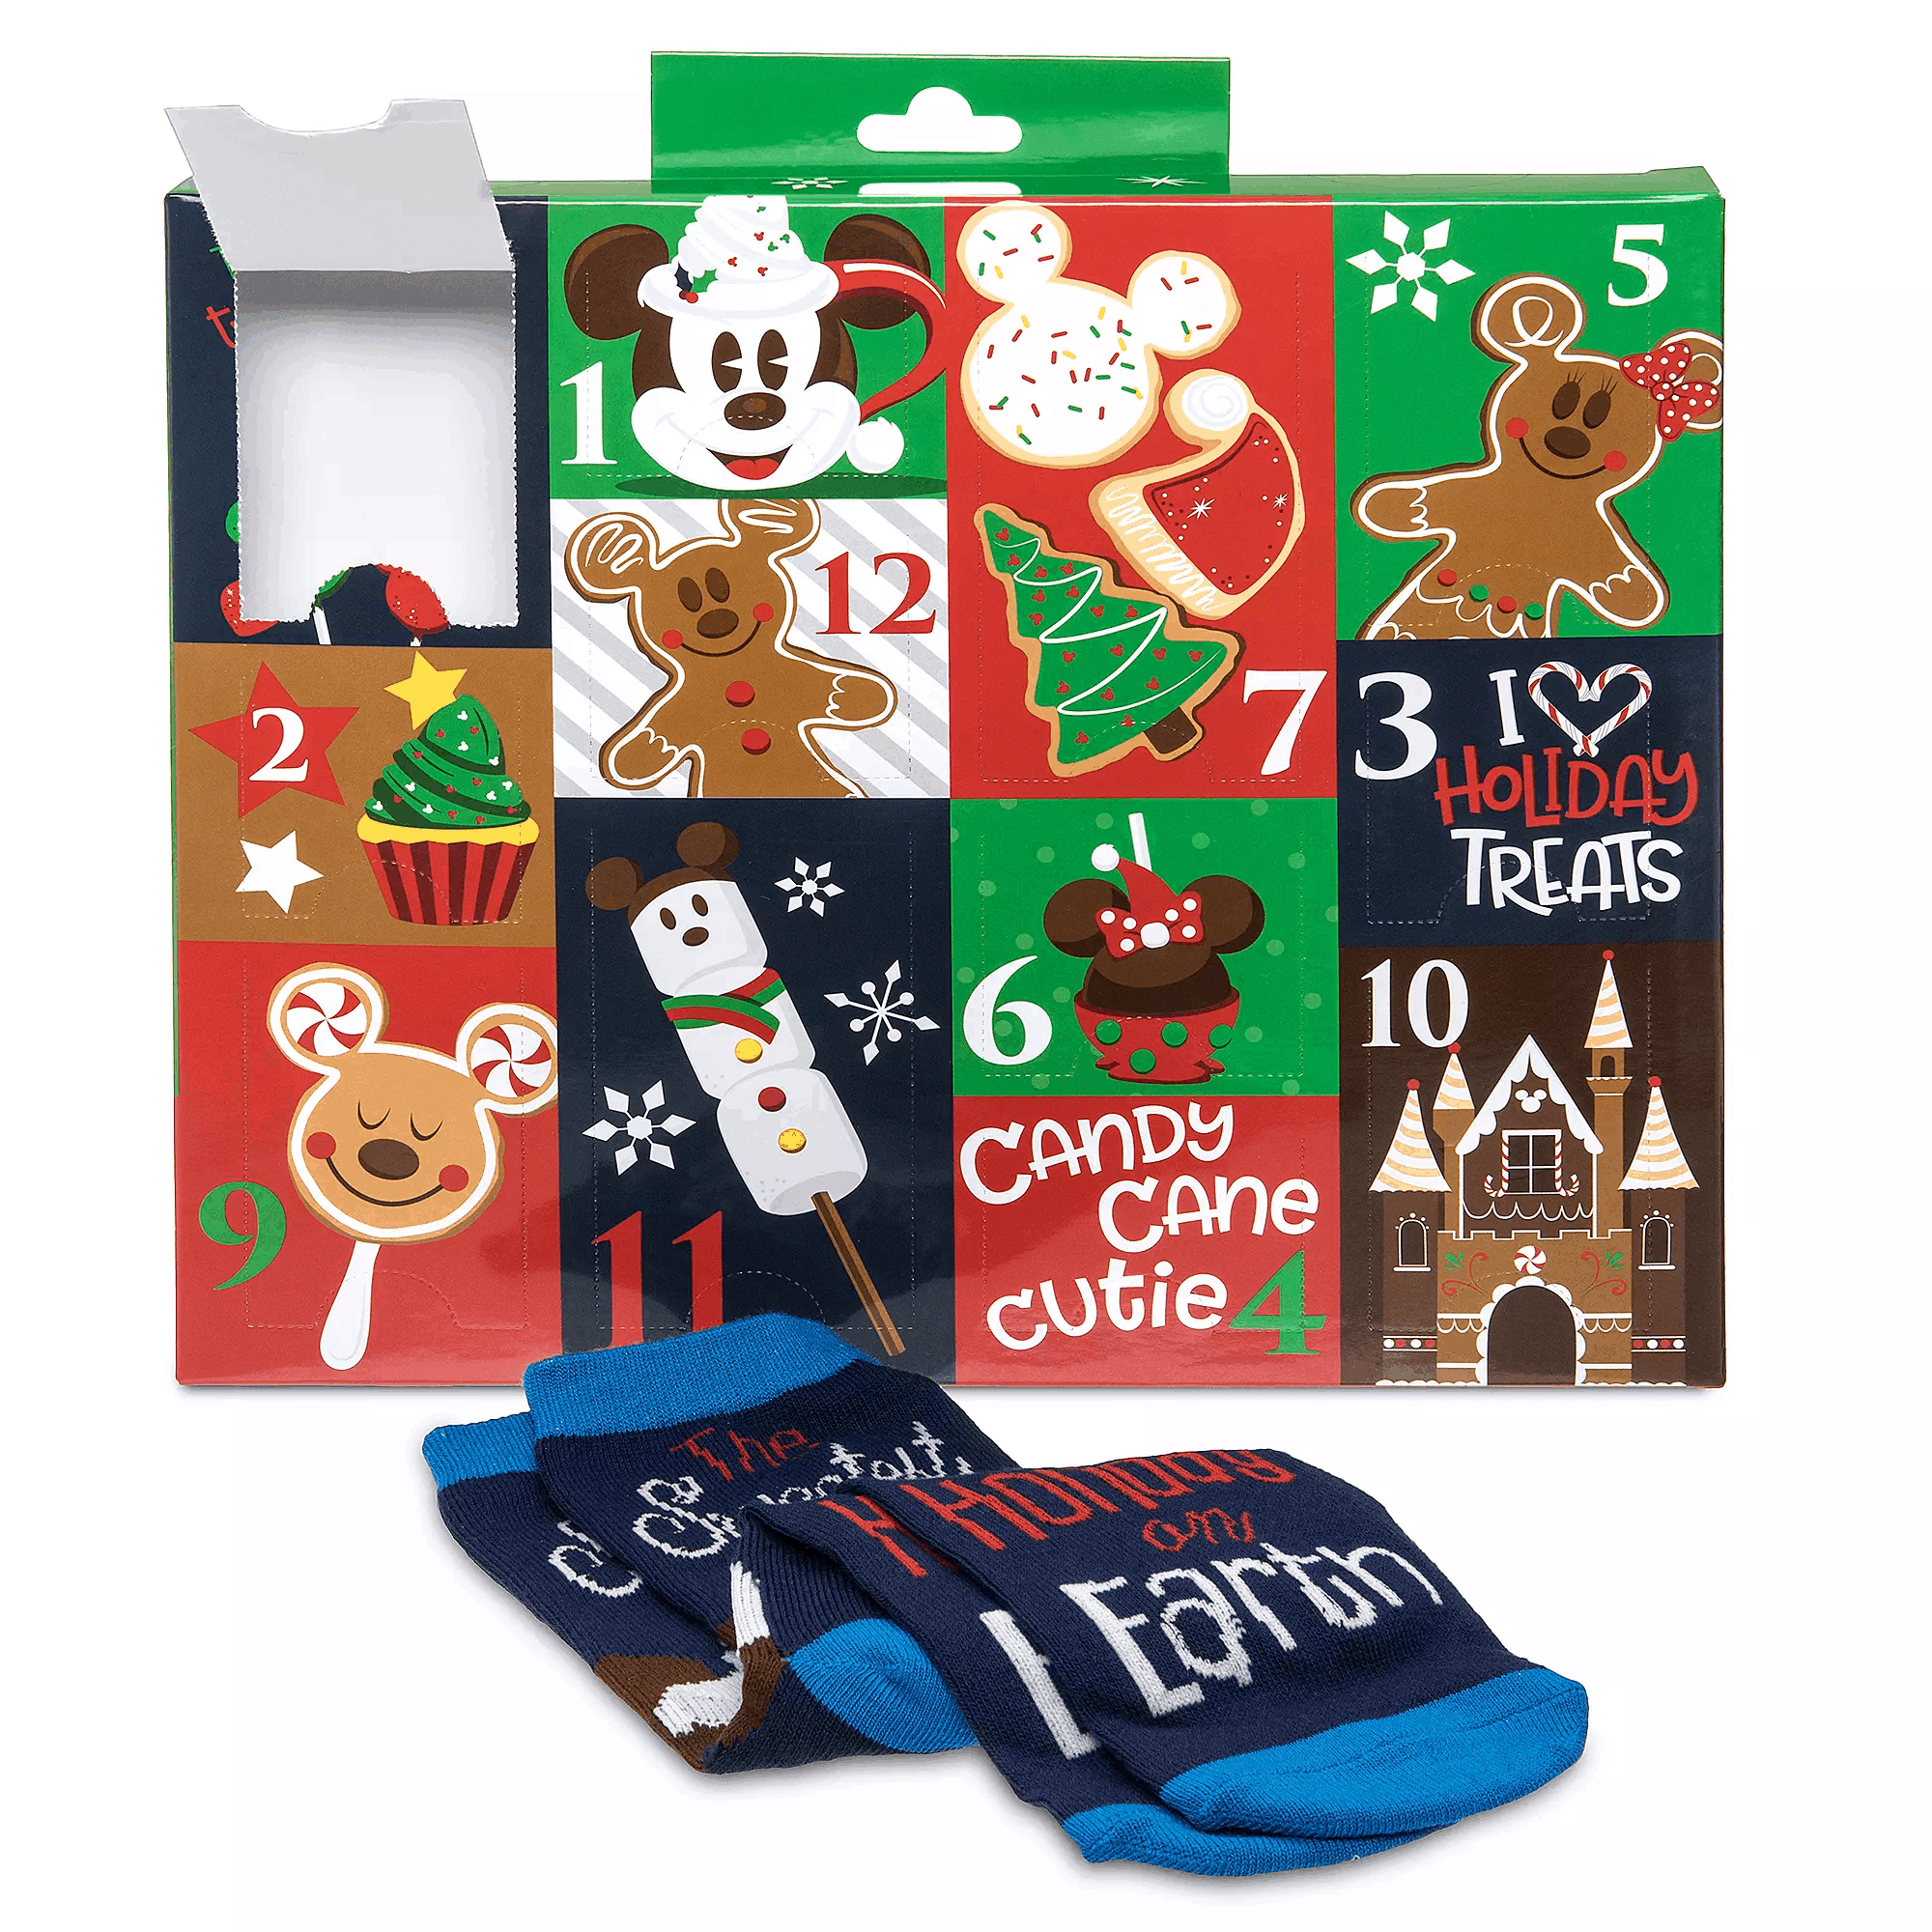 Disney Socks Advent Calendar Reviews Get All The Details At Hello